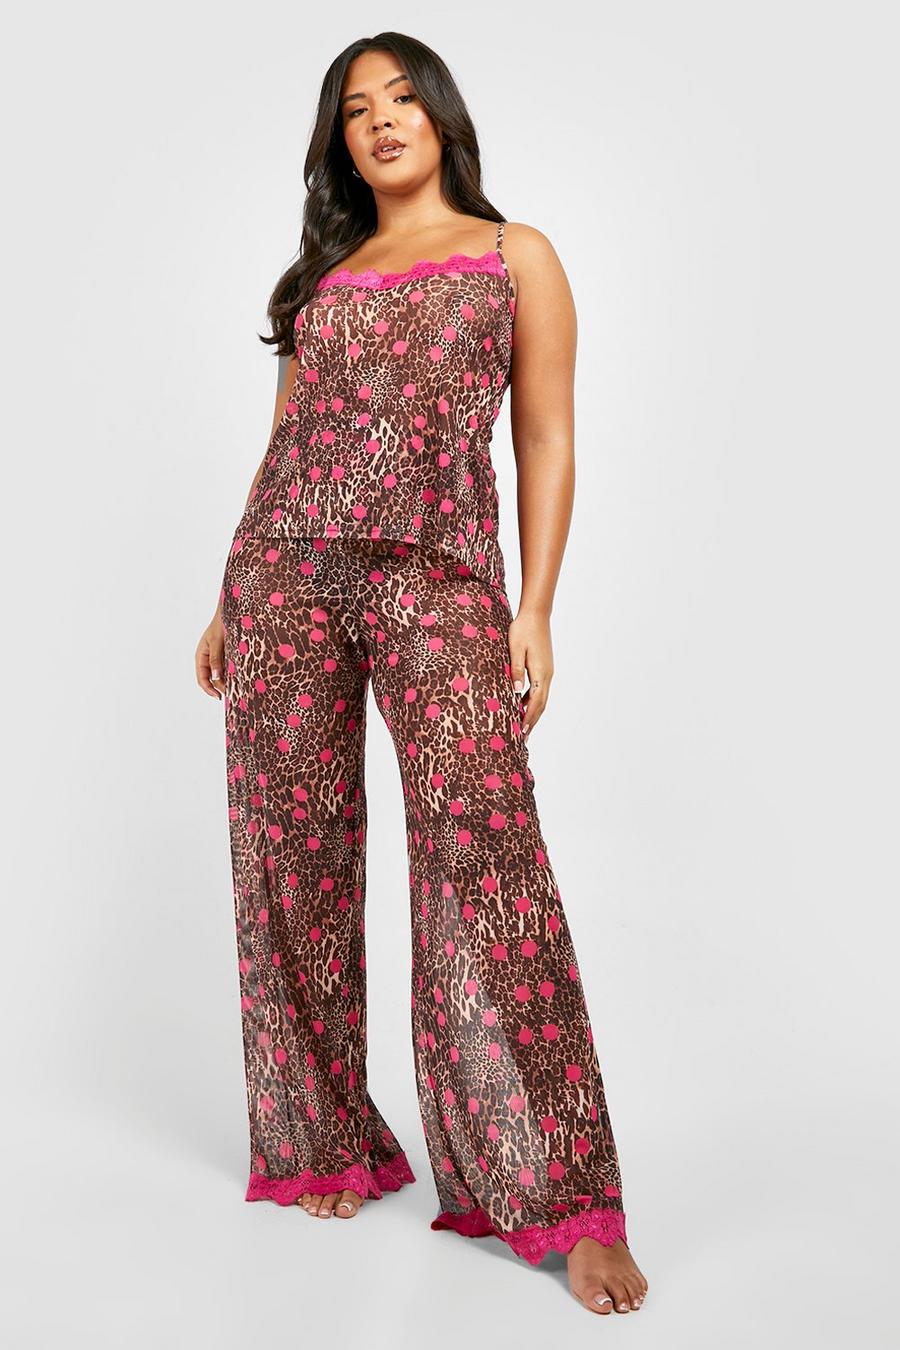 Brown Plus Leopard Print Polka Dot Lace Trim Cami Top & Pants Pyjama Set